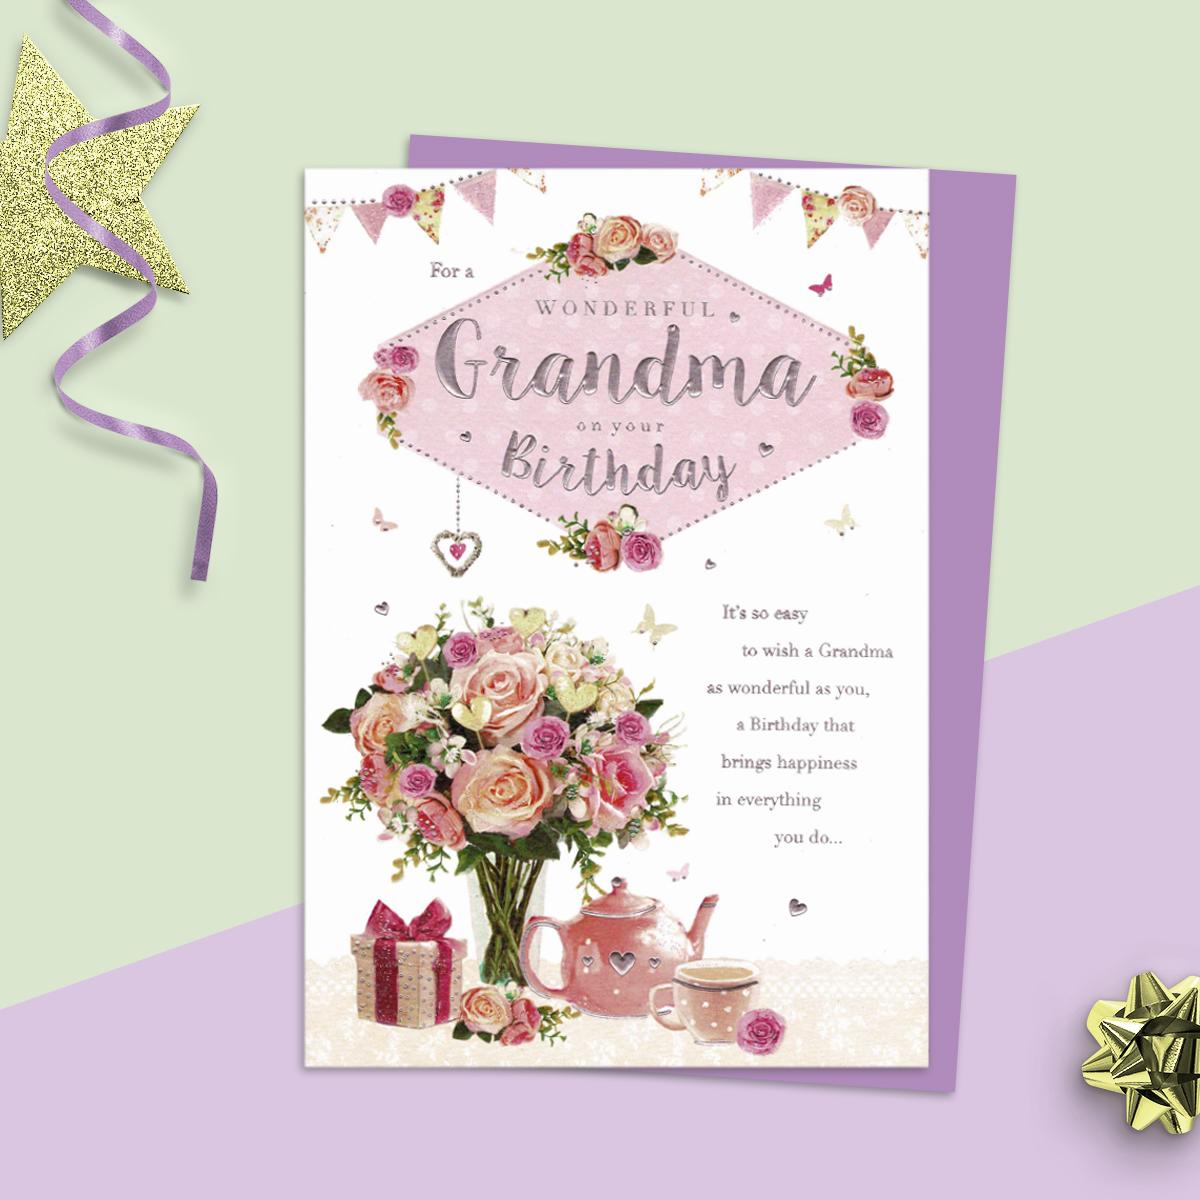 Grandma Birthday Card alongside Its Envelope